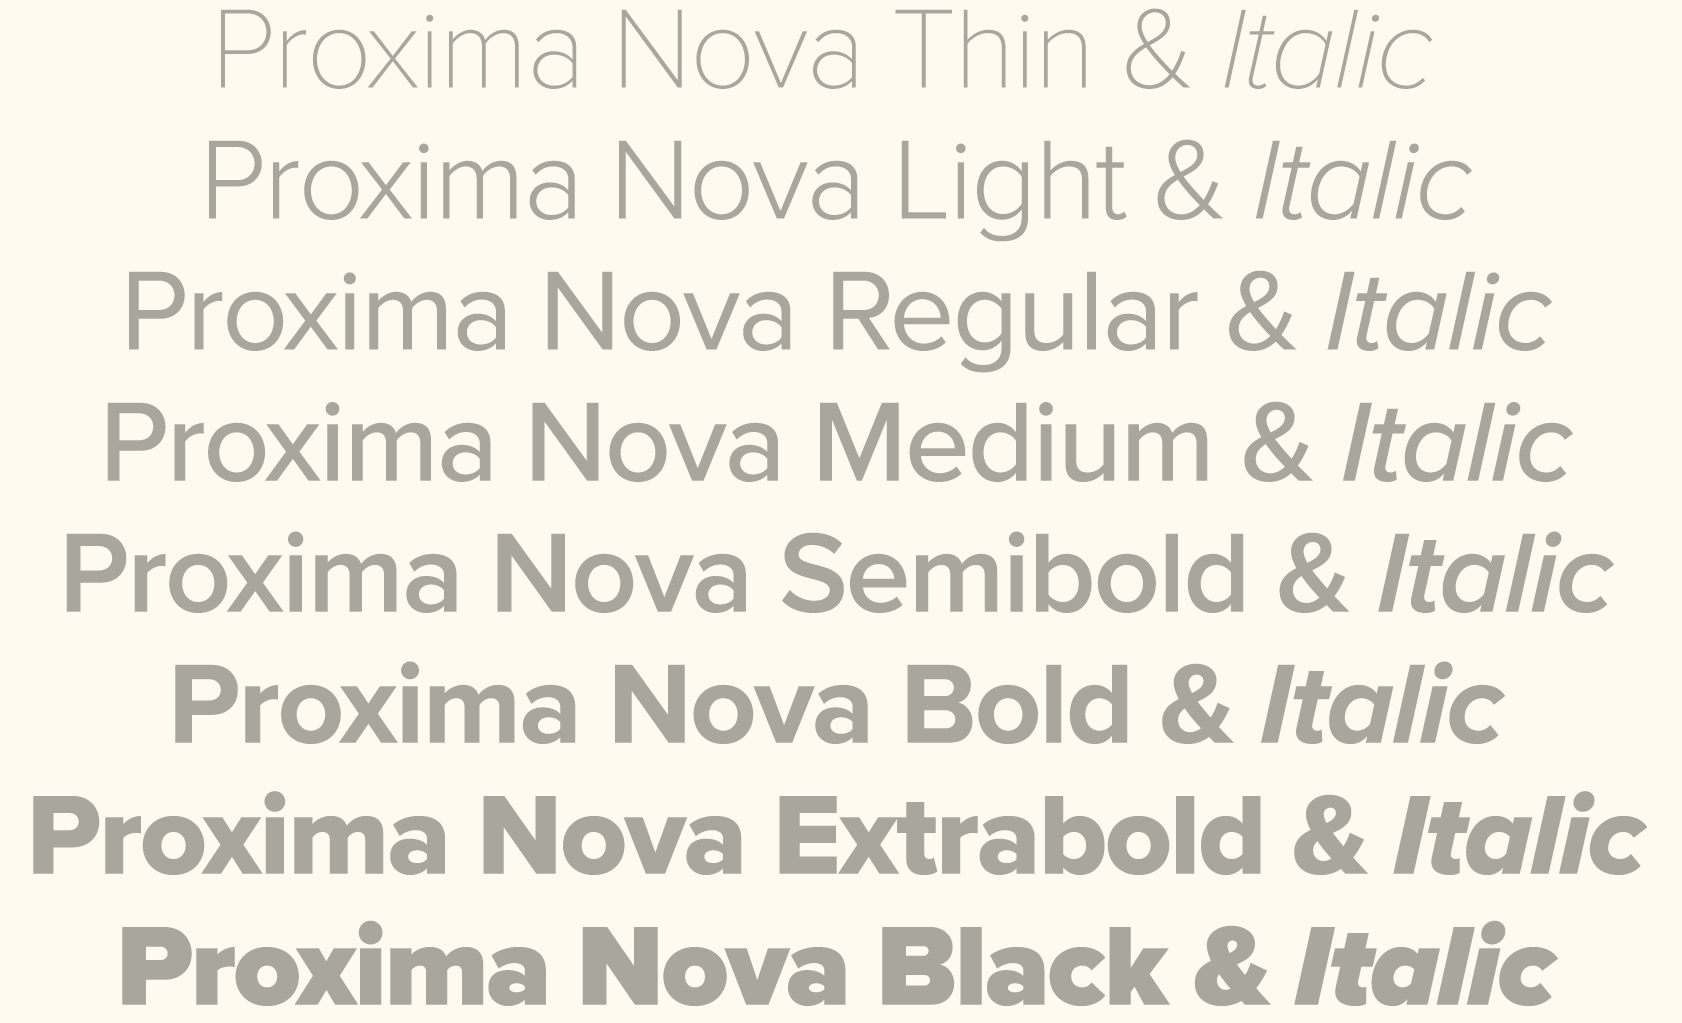 Proxima Nova Light Italic Font Free Download